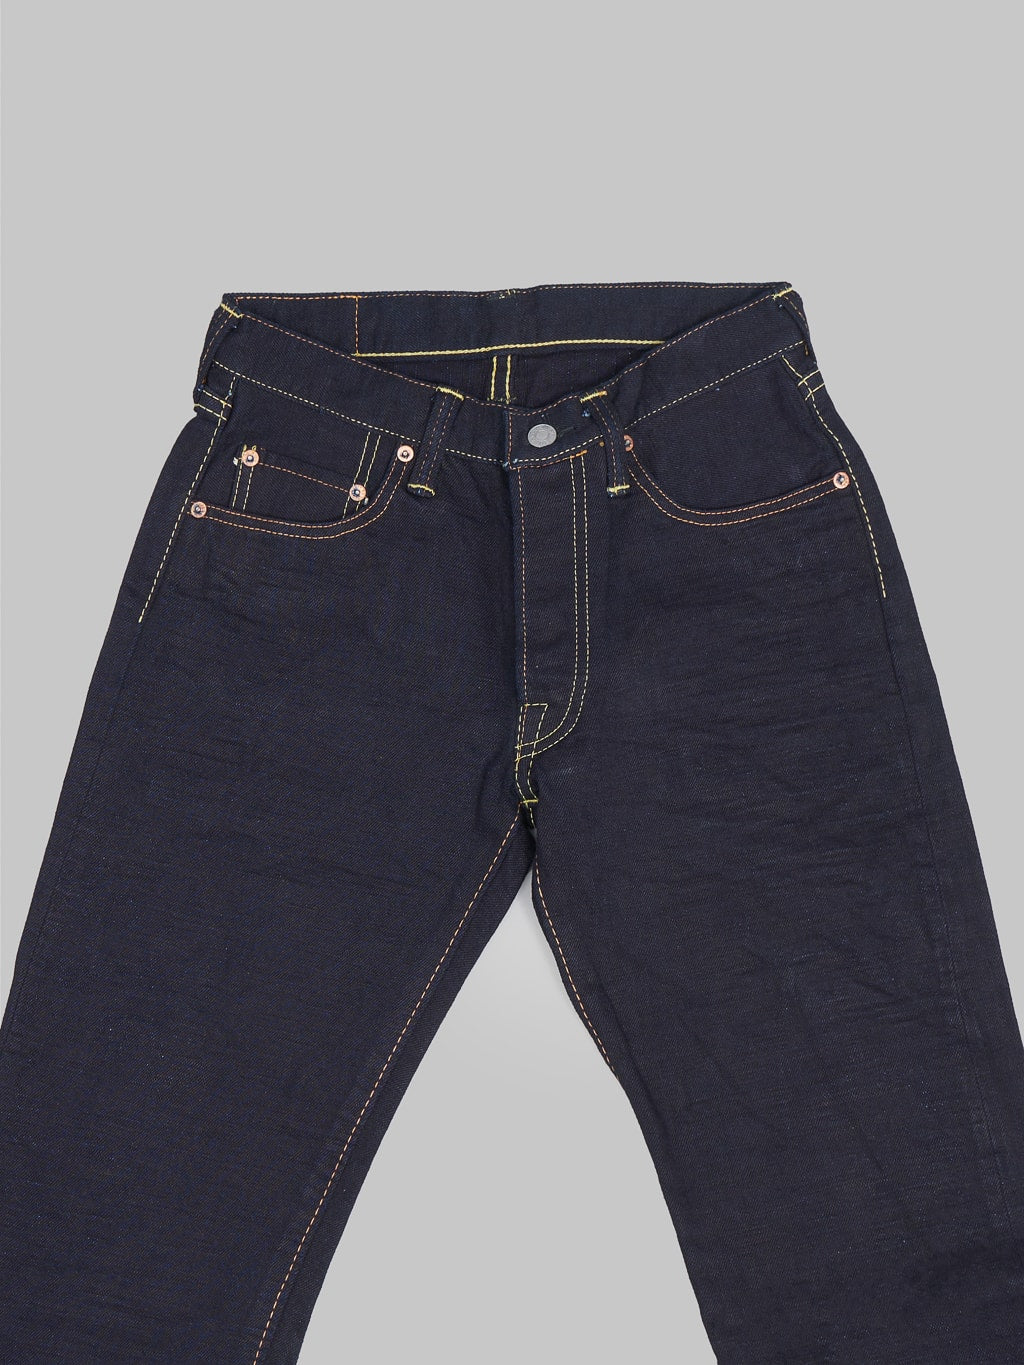 The Strike Gold 5004ID double indigo selvedge jeans waist